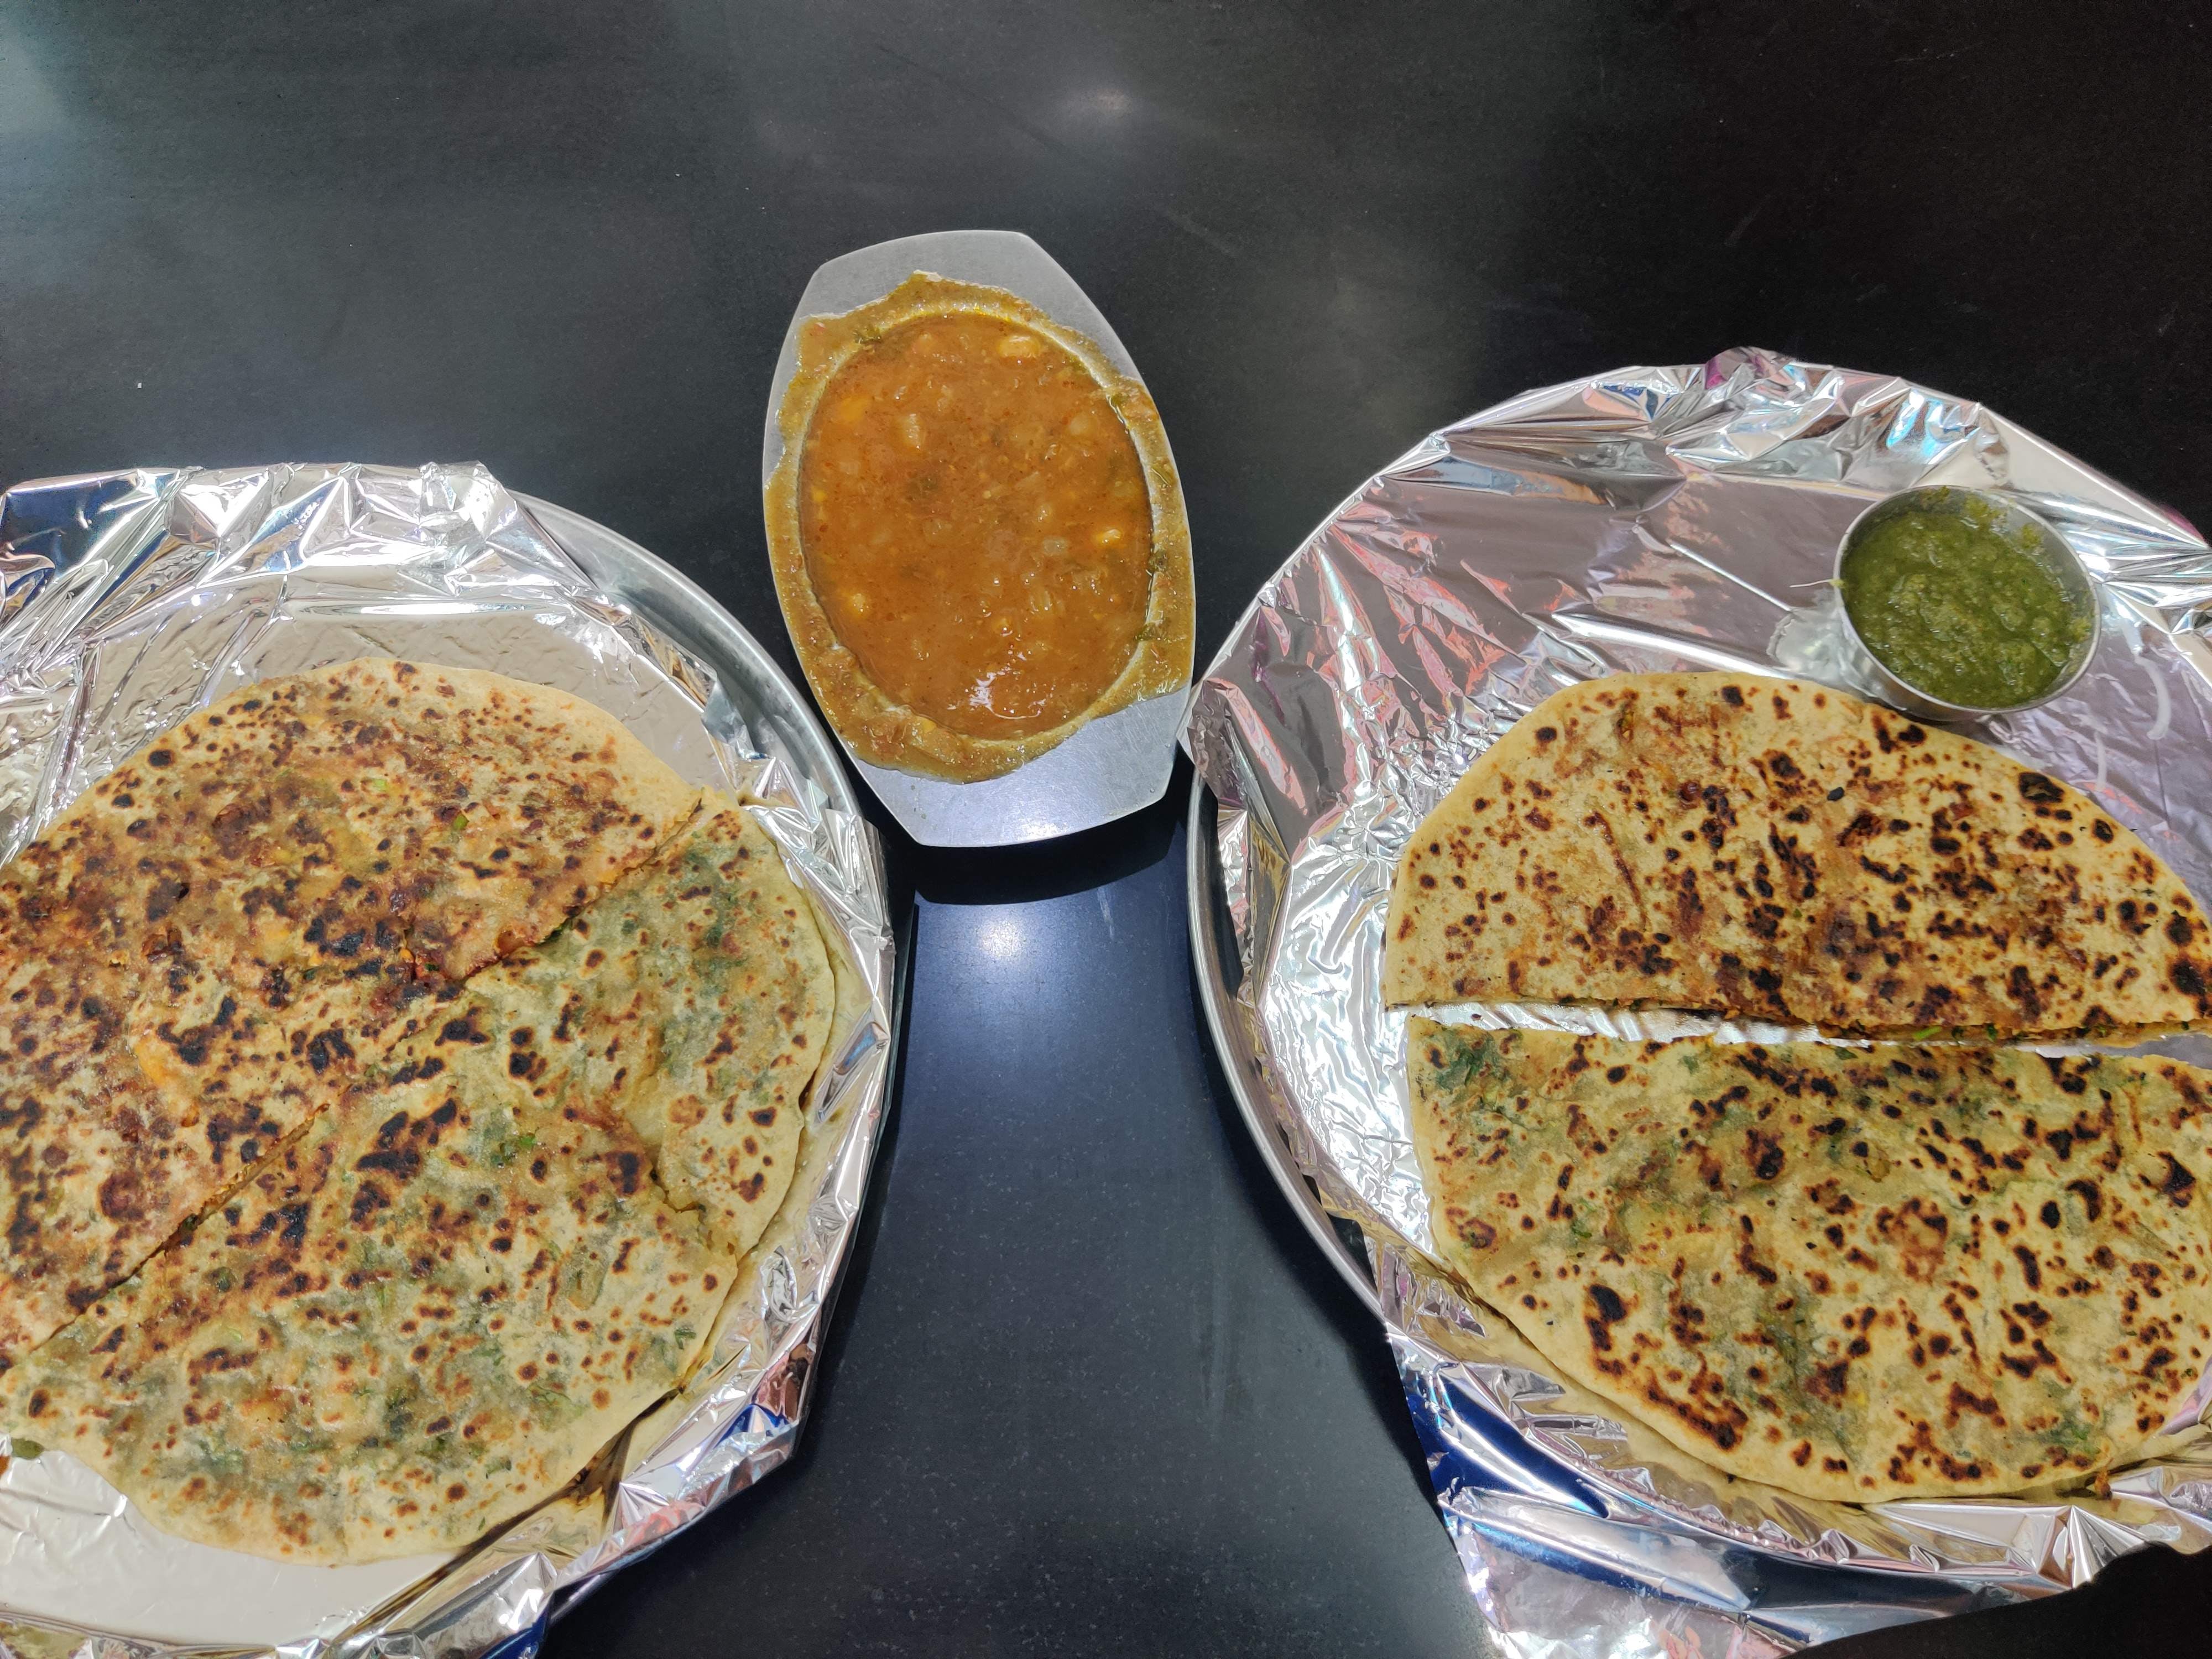 Dish,Food,Cuisine,Ingredient,Produce,Indian cuisine,Lunch,Meal,Pakistani cuisine,Roti prata